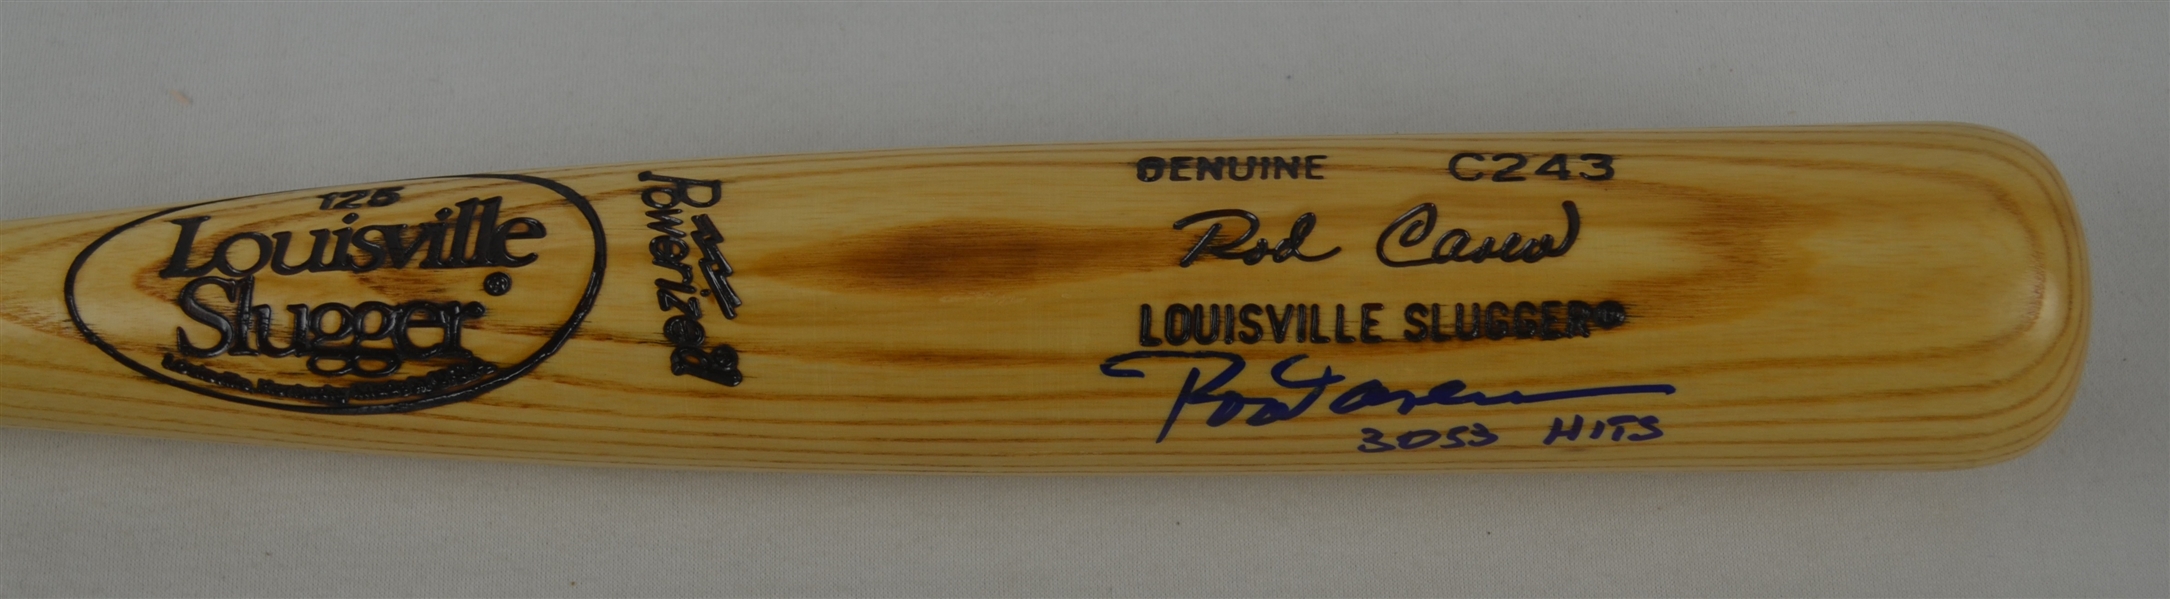 Rod Carew Autographed Signature Model Louisville Slugger Bat